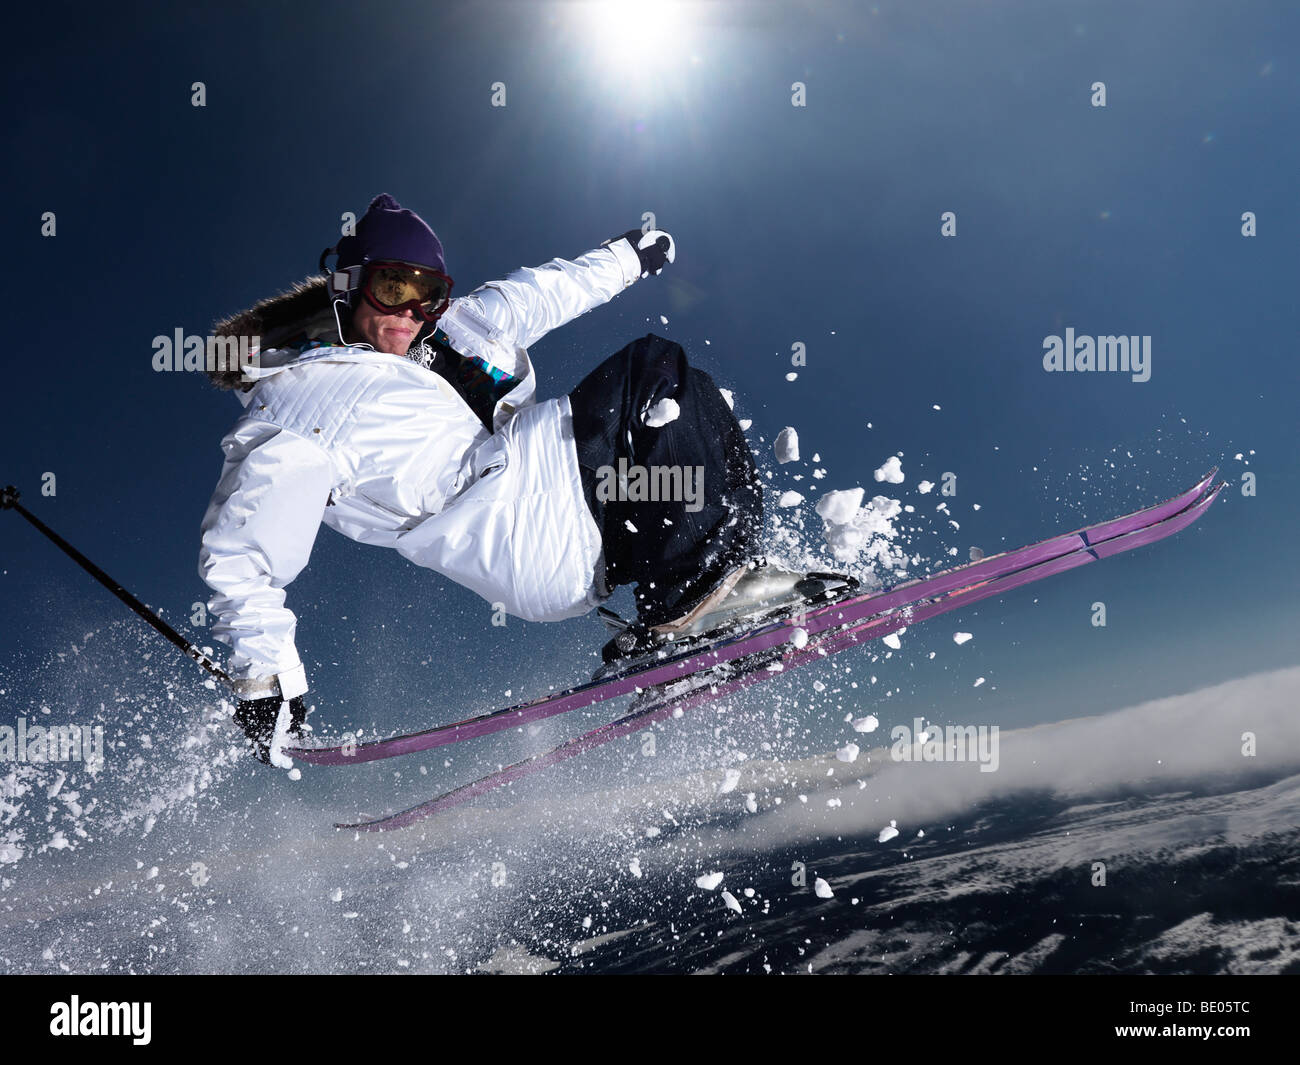 Man grabbing ski tail mid air. Stock Photo